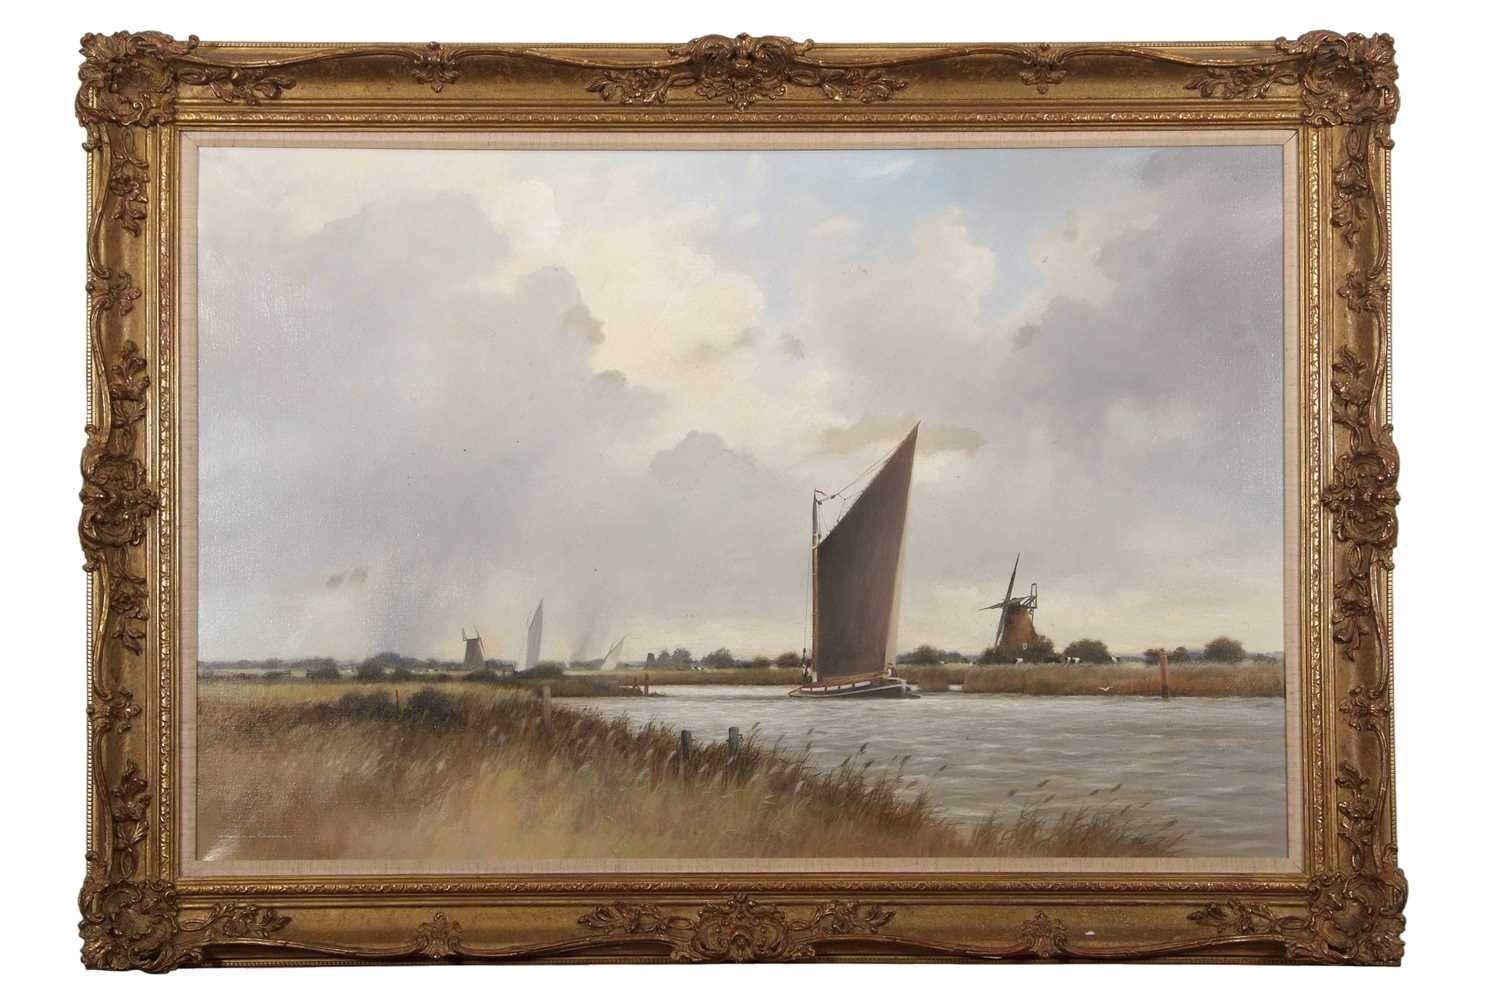 Colin Burns (British, b.1944), Broadland scene with wherry, oil on canvas, signed, 59x90cm, framed.